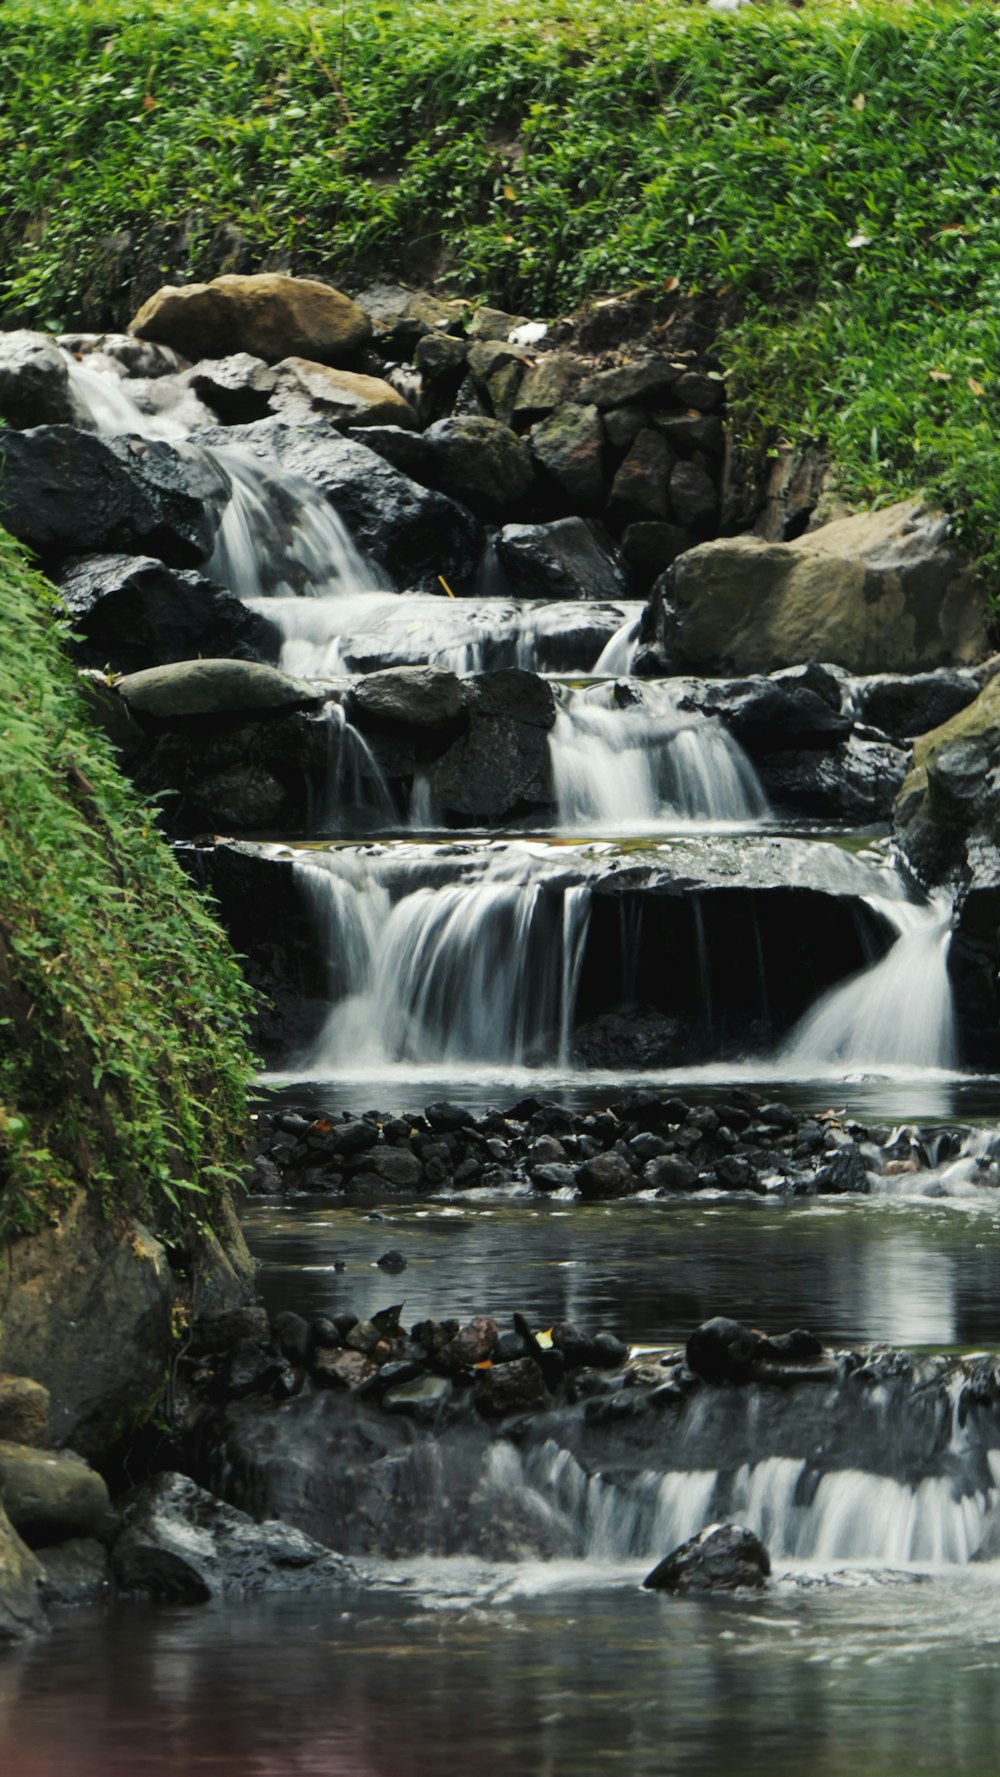 flowing waterfalls between vegetation during daytime